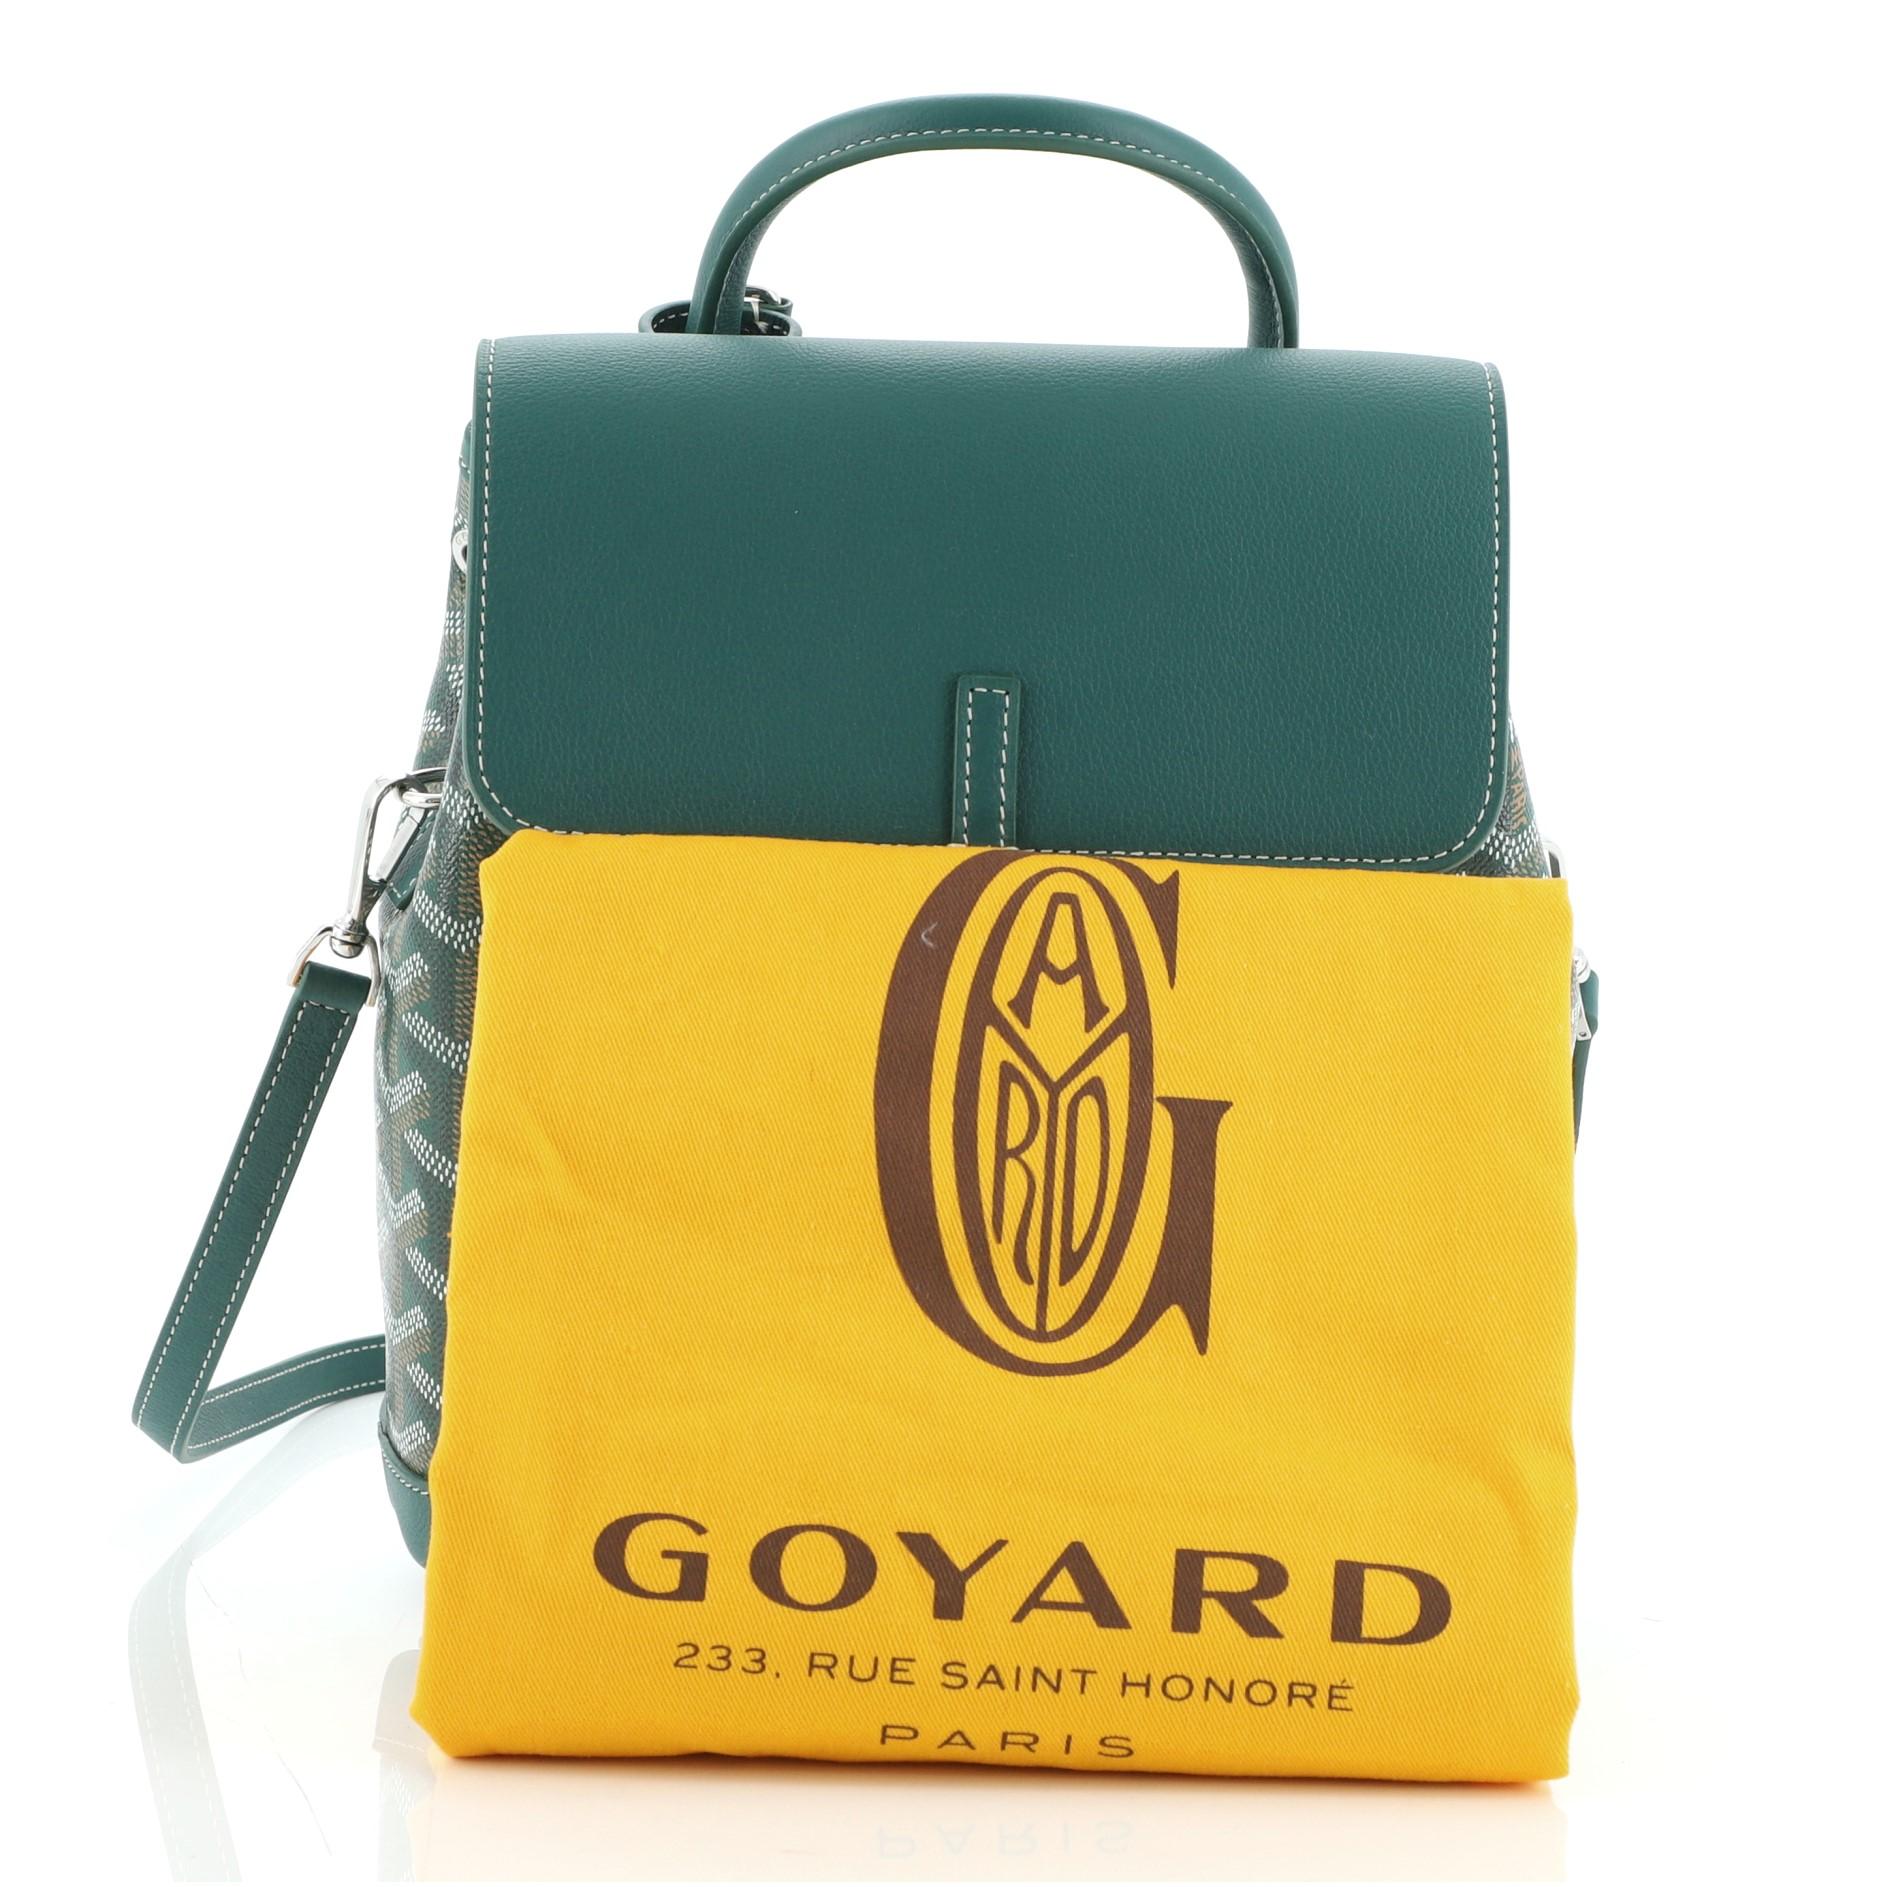 Goyard Mini Alpin - For Sale on 1stDibs  goyard alpin mini backpack price, goyard  alpin mini價錢, goyard alpin mini price